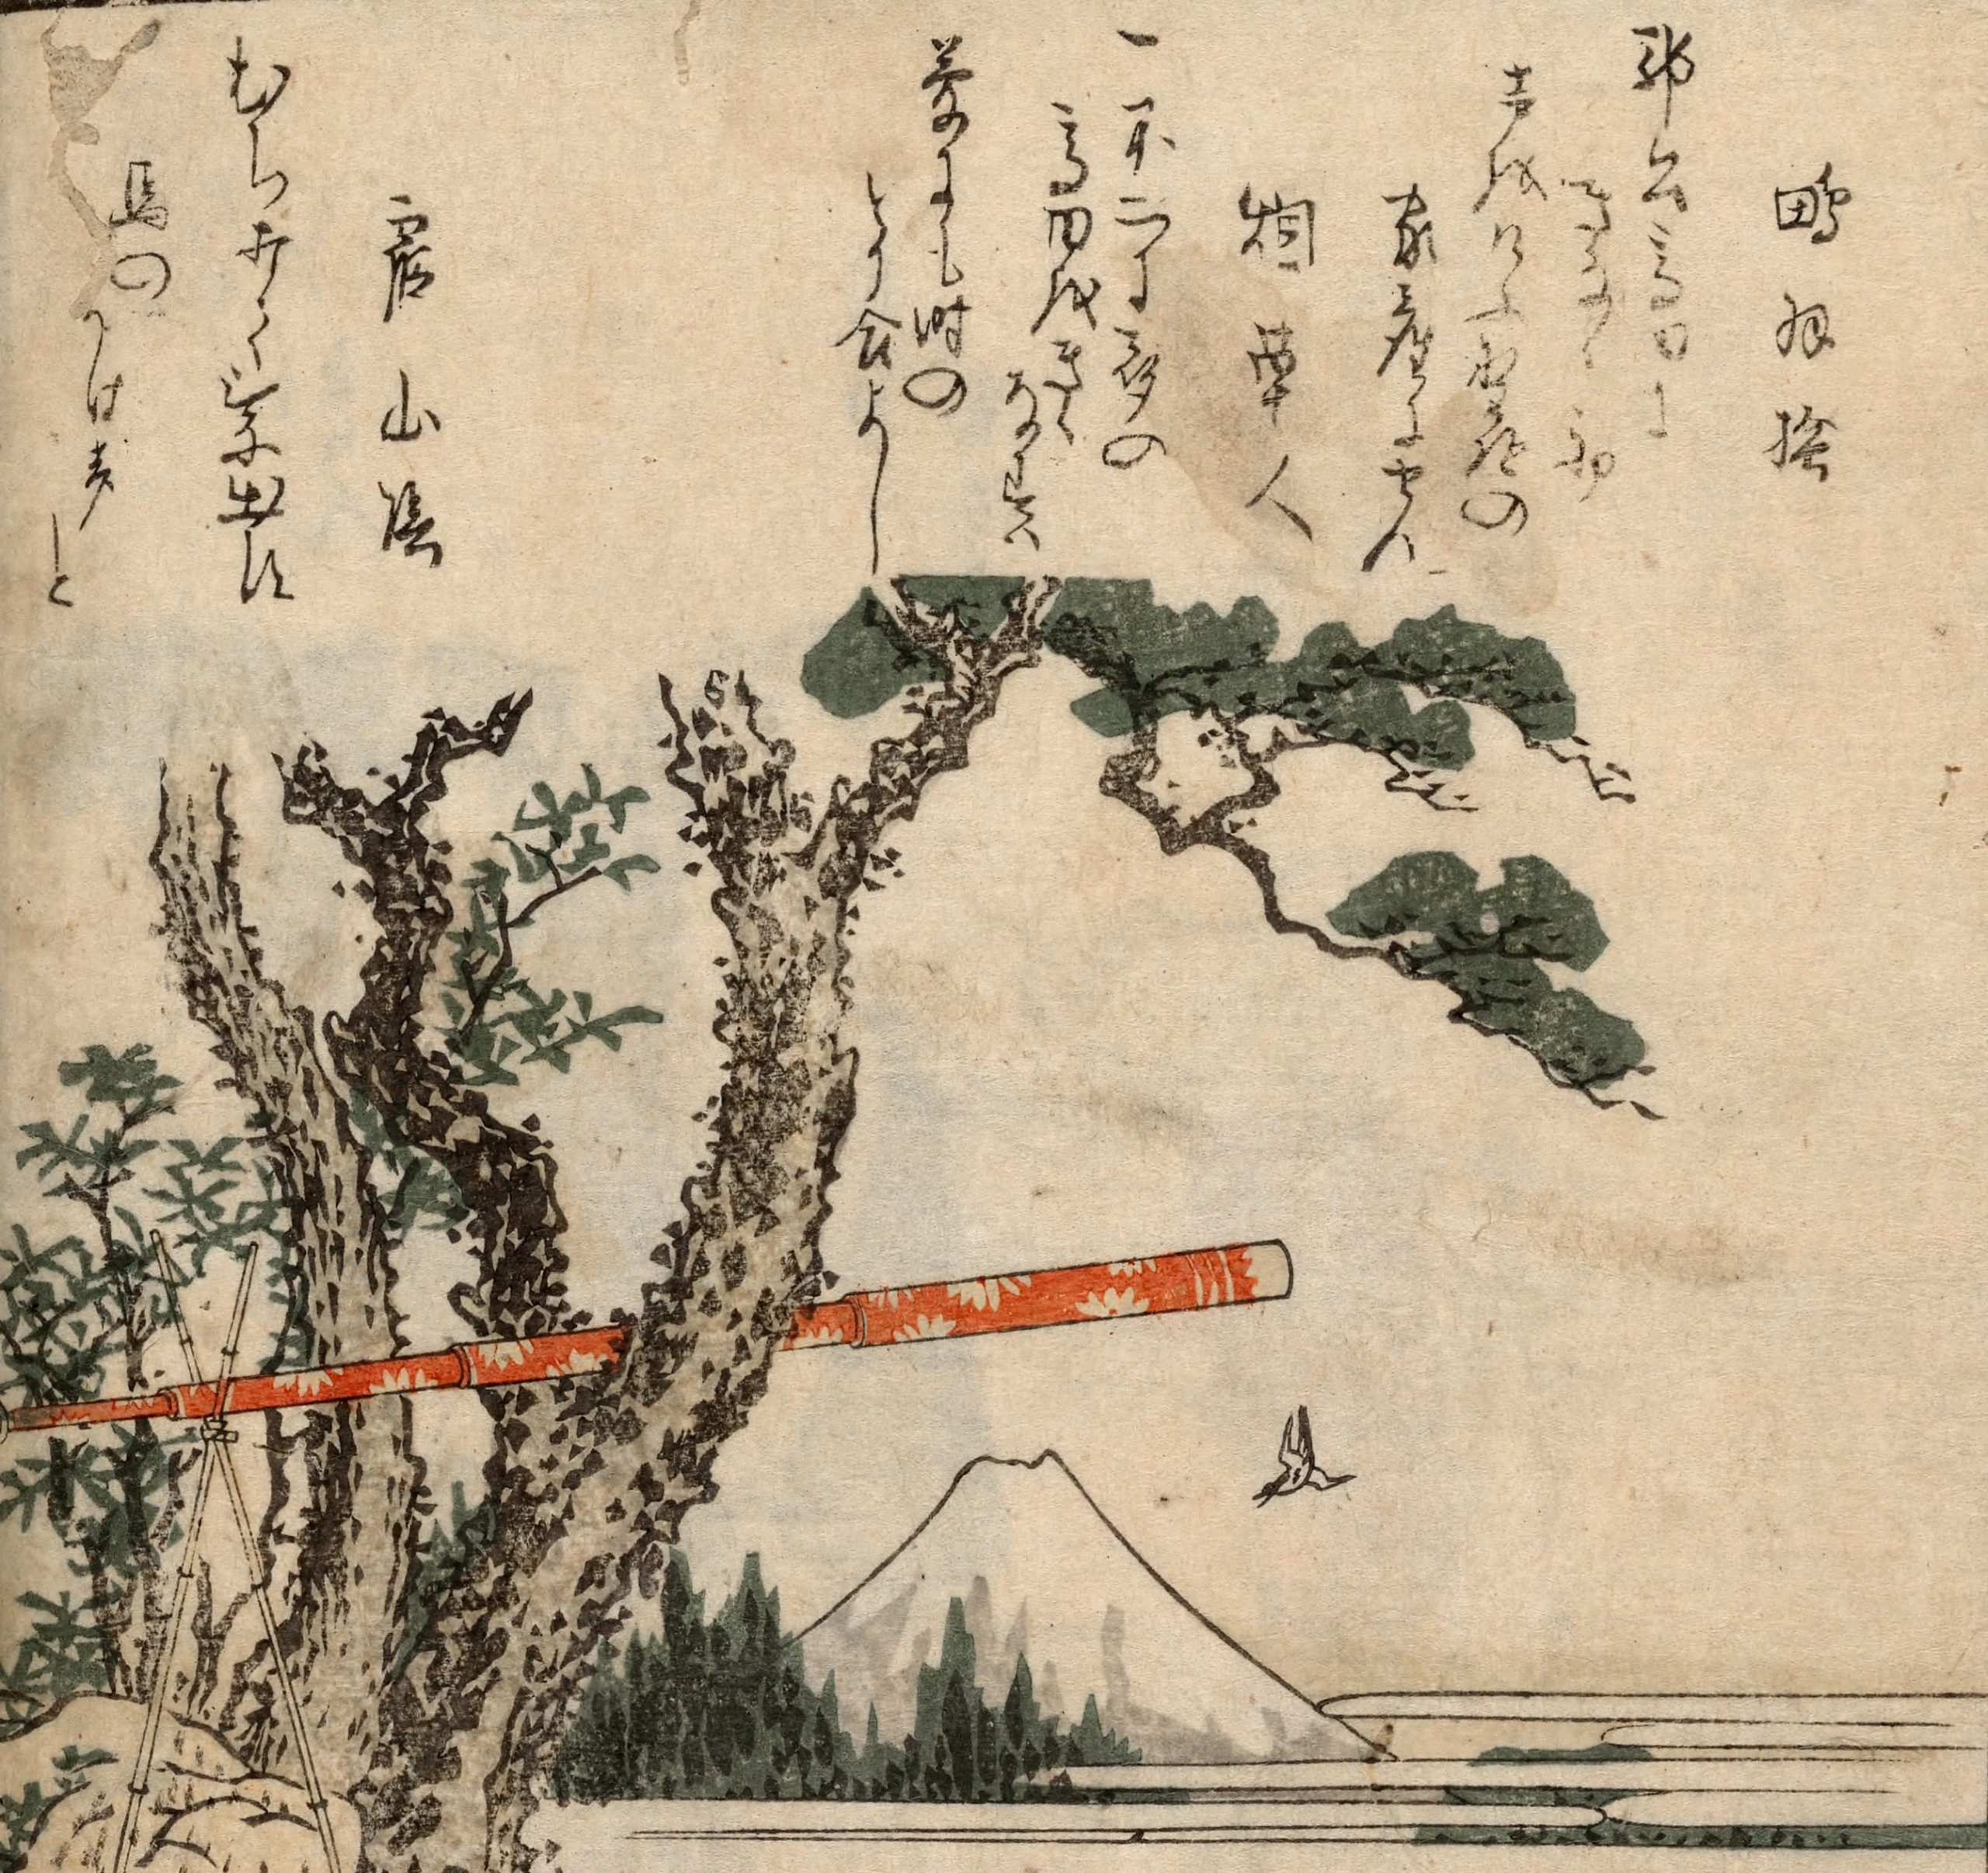 Detail of text and landscape, “Takatanobaba” in Katsushika Hokusai, Illustrated Book of Humorous Poems “Mountain on Mountain” (Ehon kyōka yama mata yama), 1804, woodblock printed book (Smithsonian Libraries)